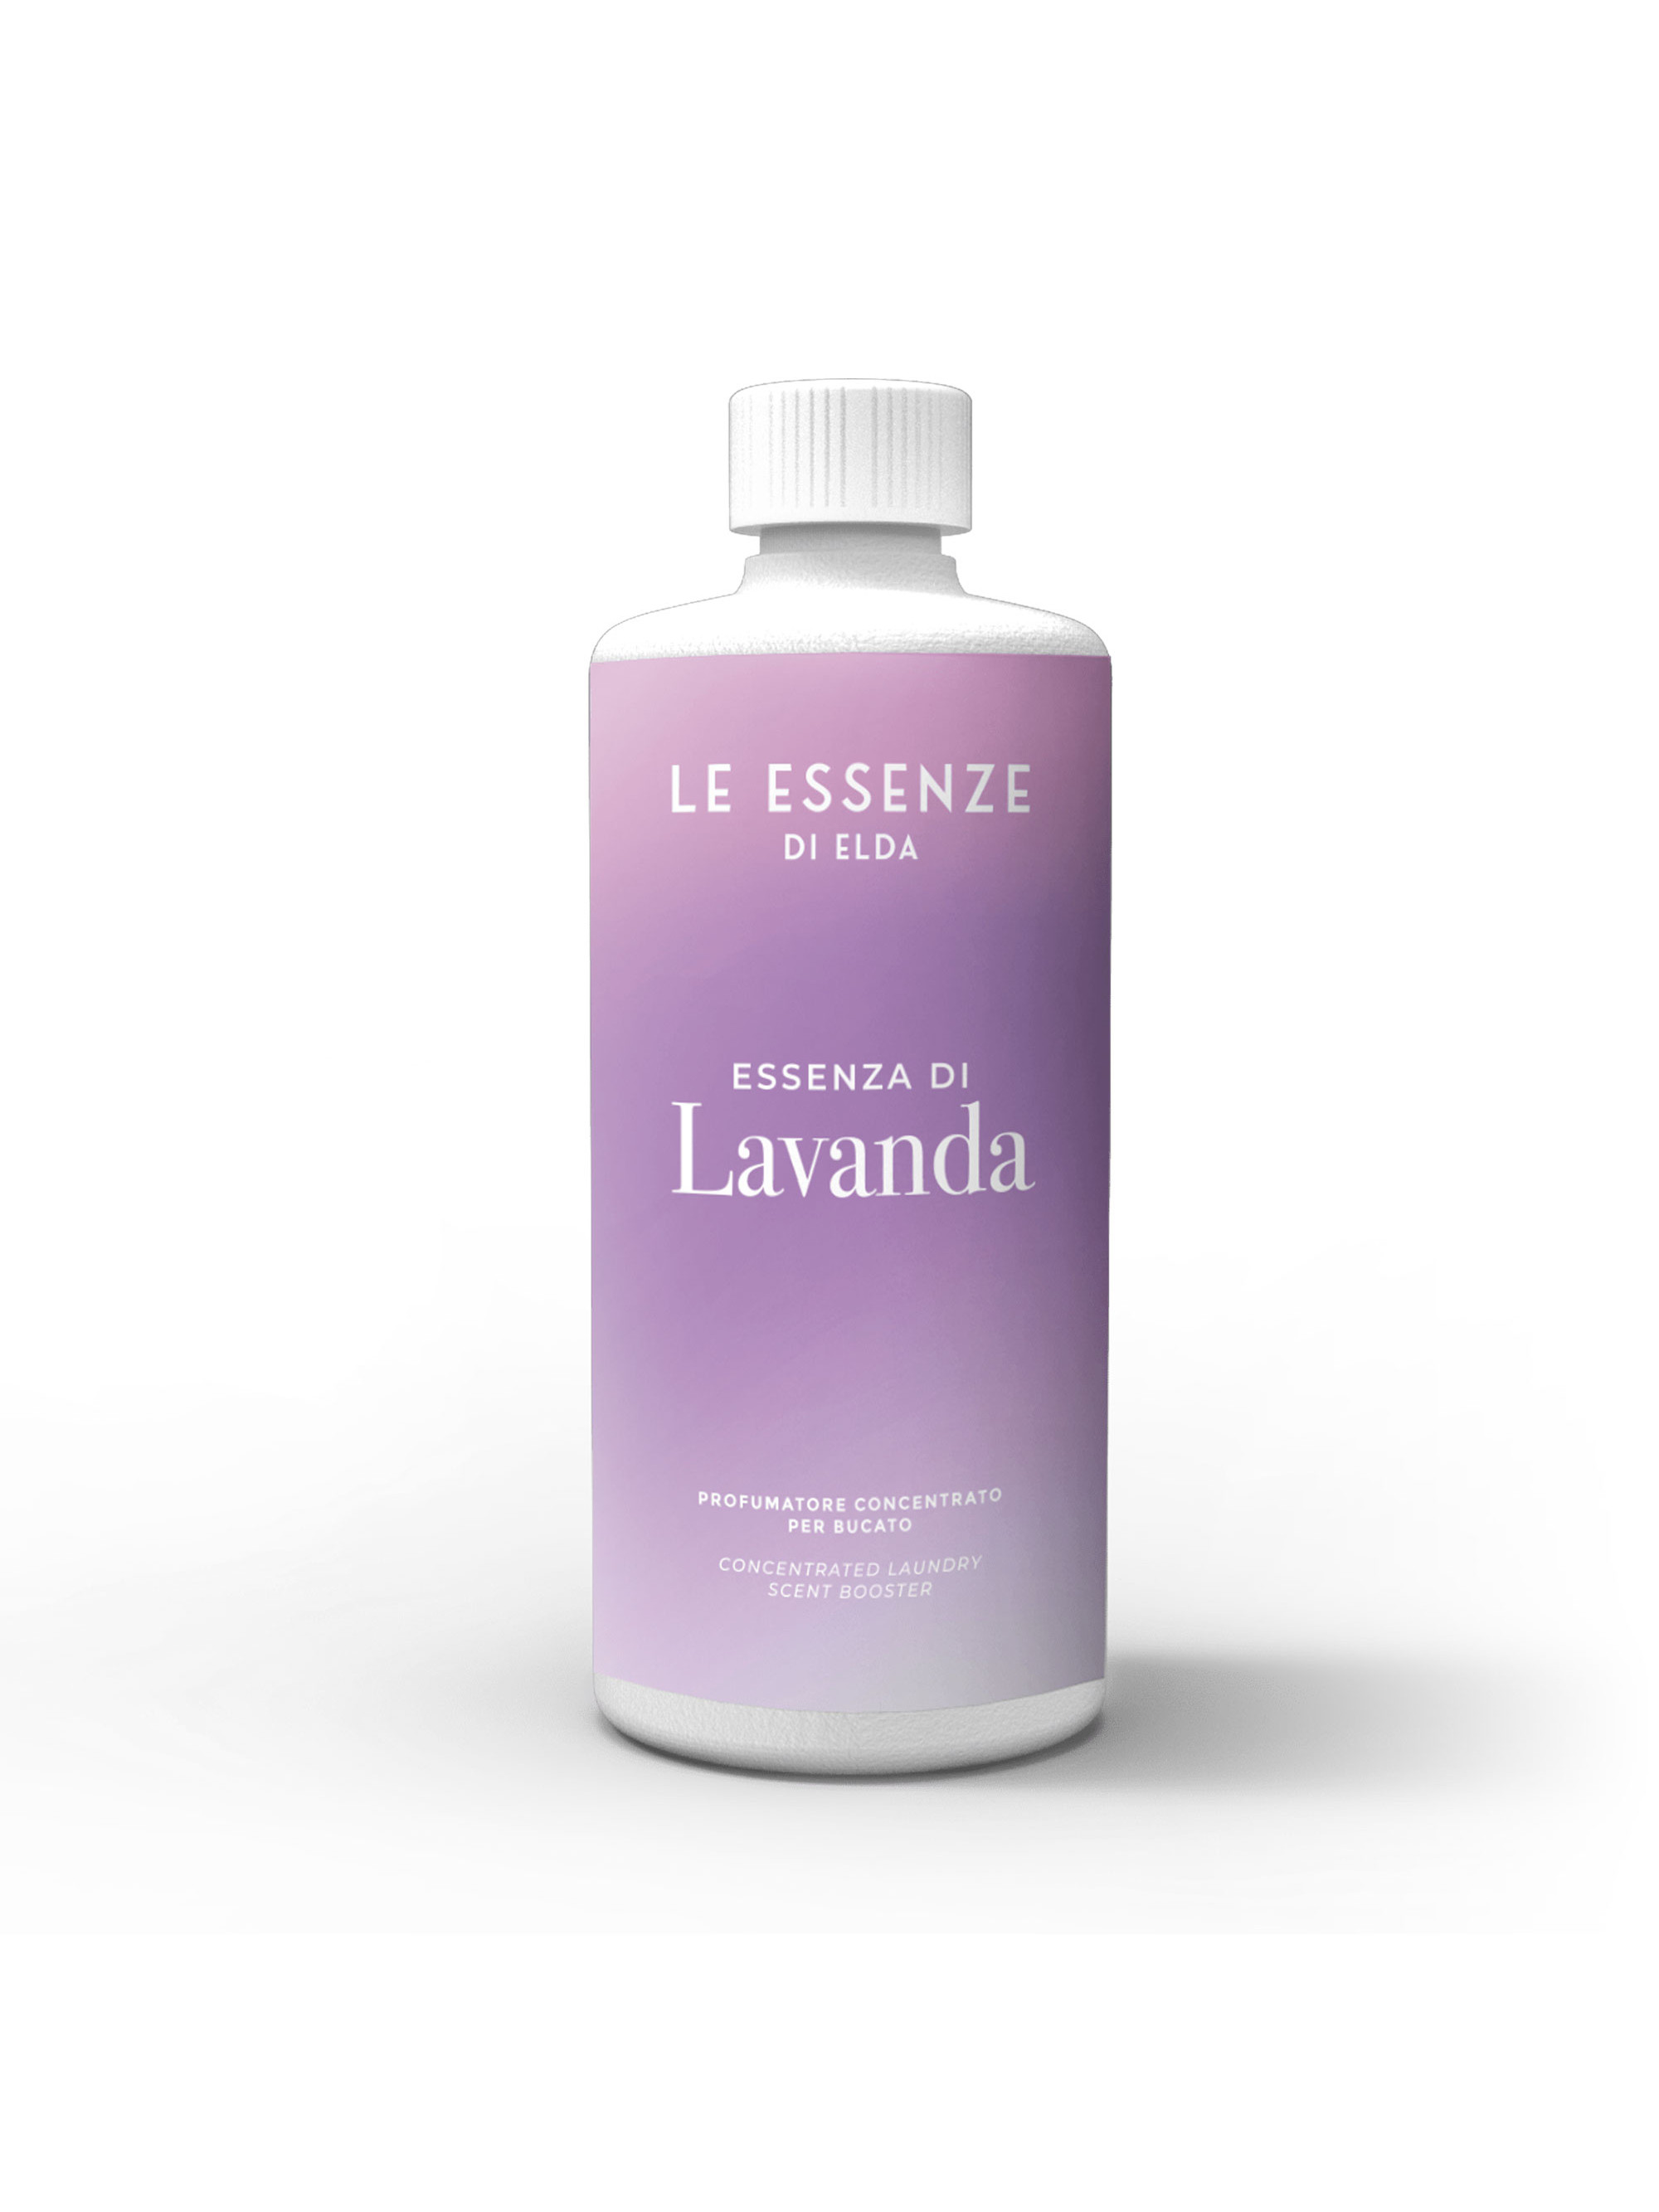 Essenza Lavanda - 500ml laundry perfumer